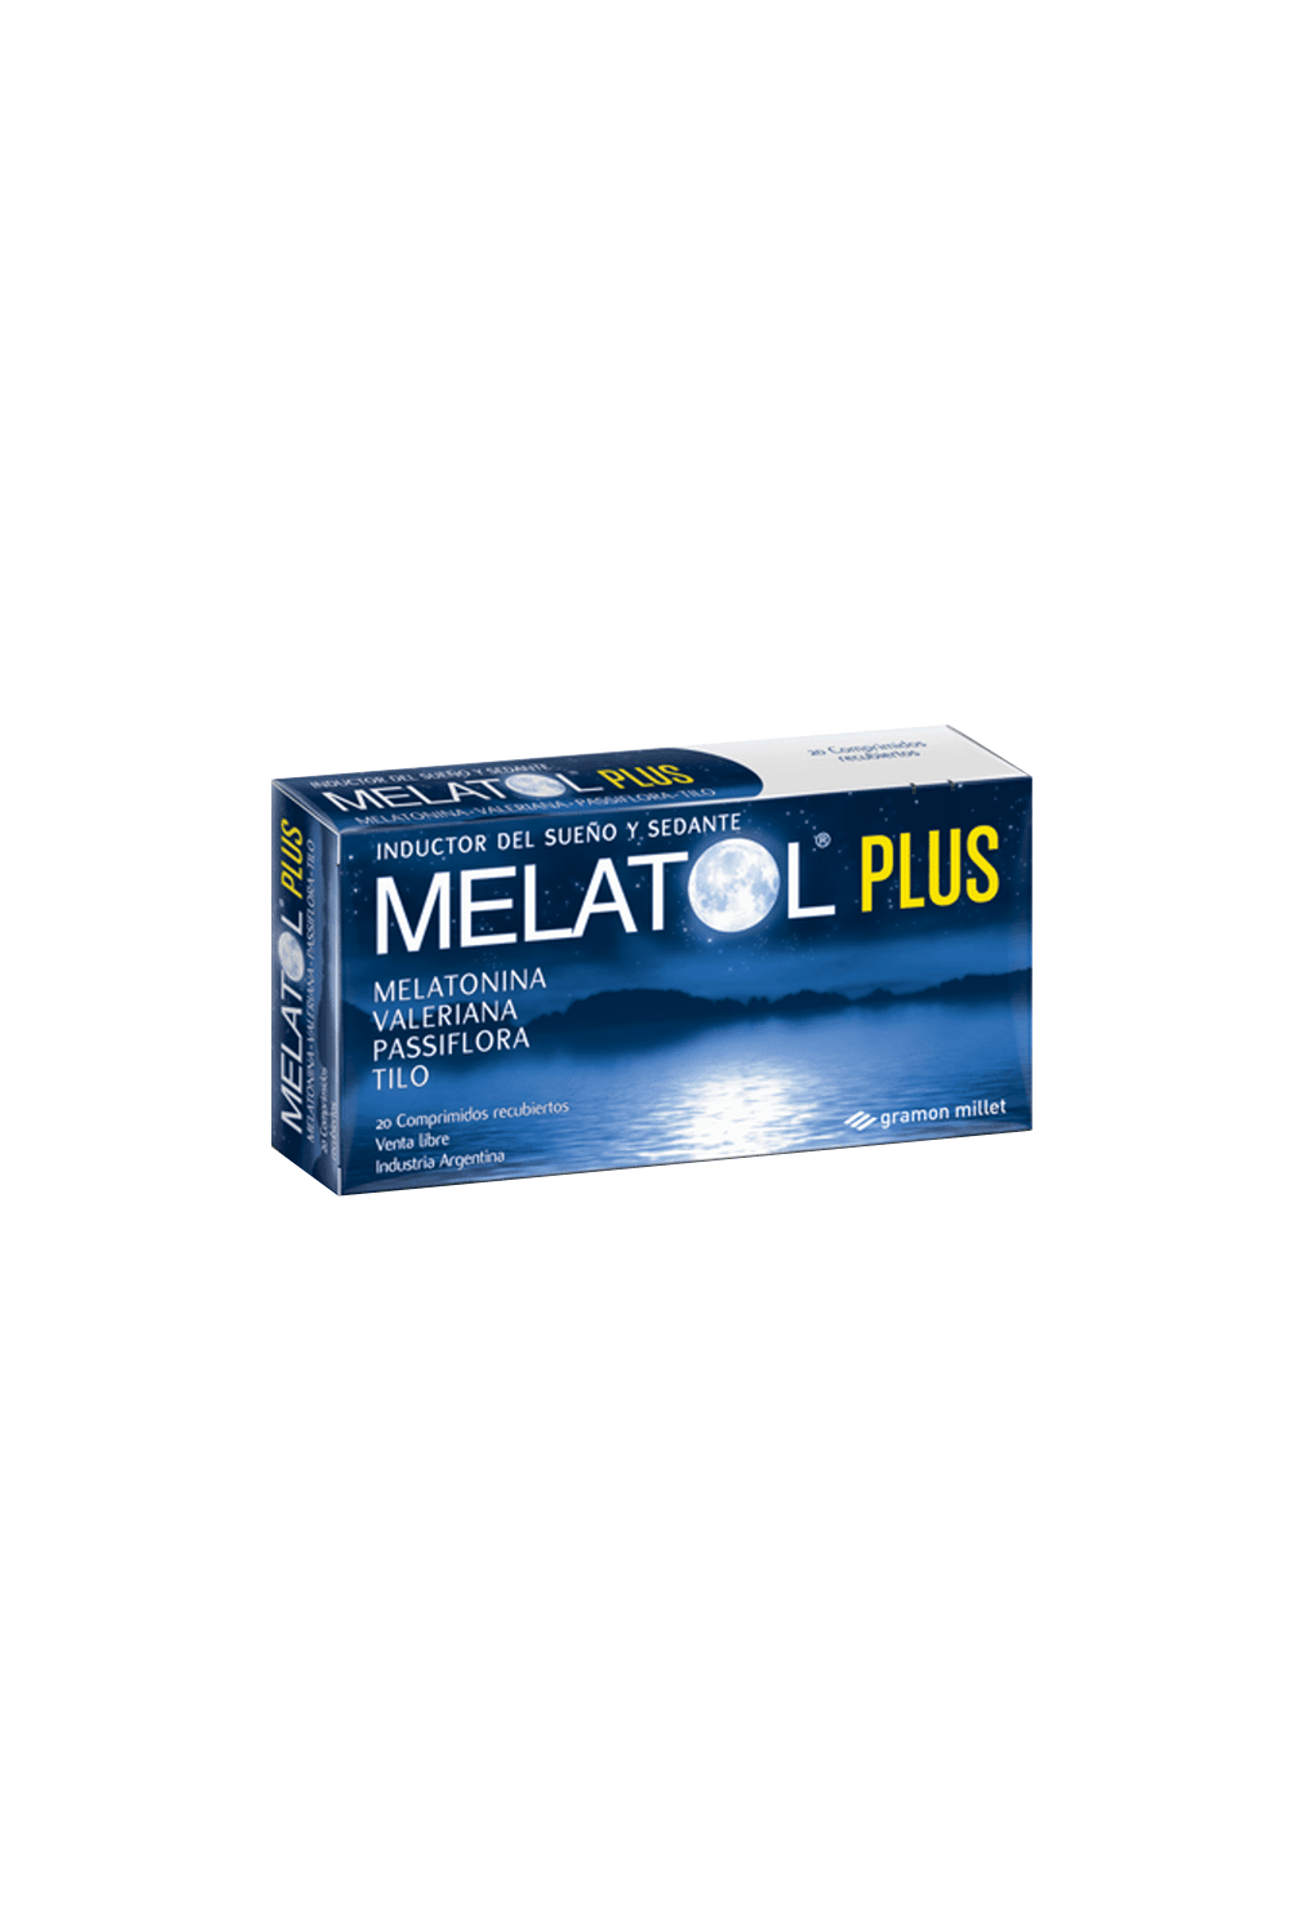 Melatol-Plus-x-20-Comprimidos-Recubiertos-Melatol